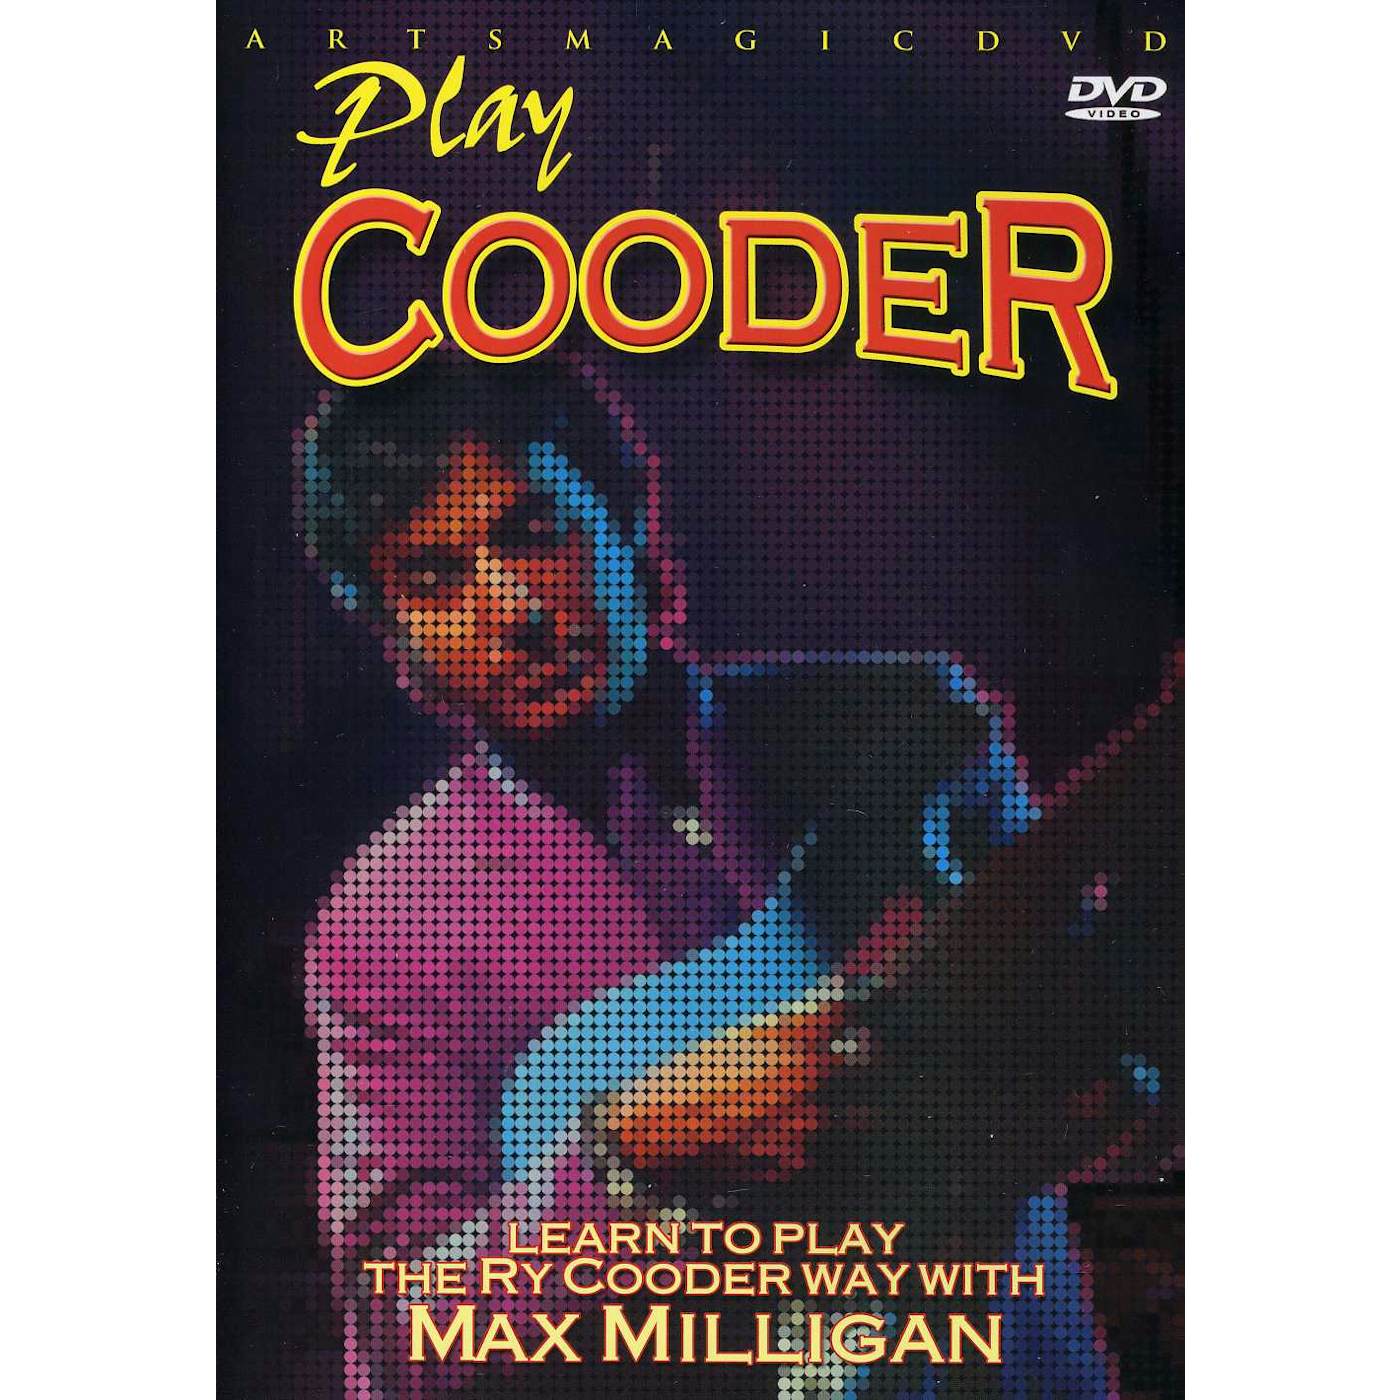 Ry Cooder PLAY COODER DVD